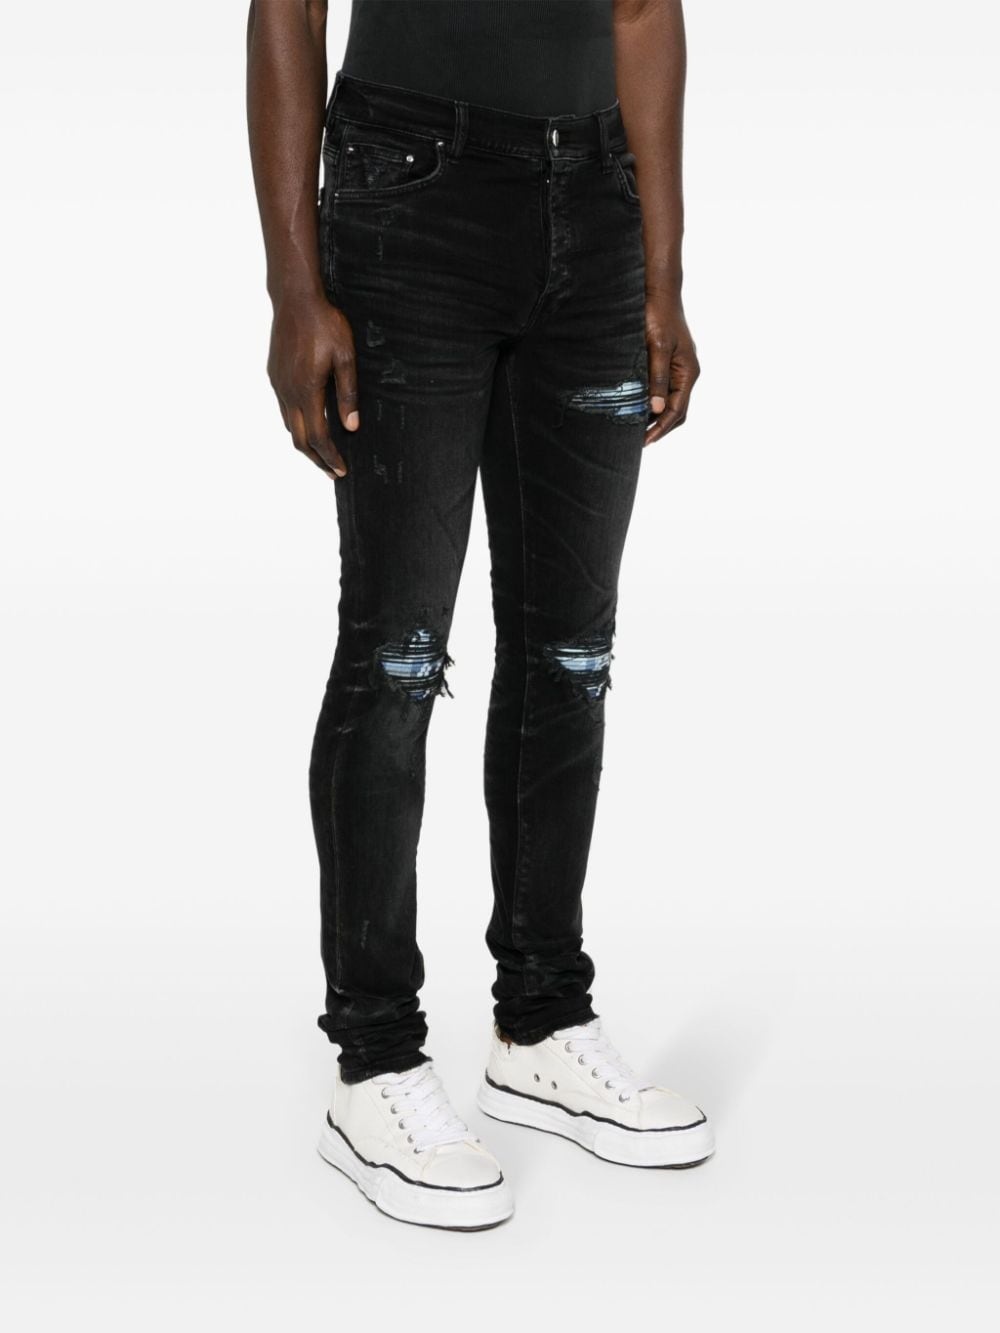 Plaid MX1 mid-rise skinny jeans - 3